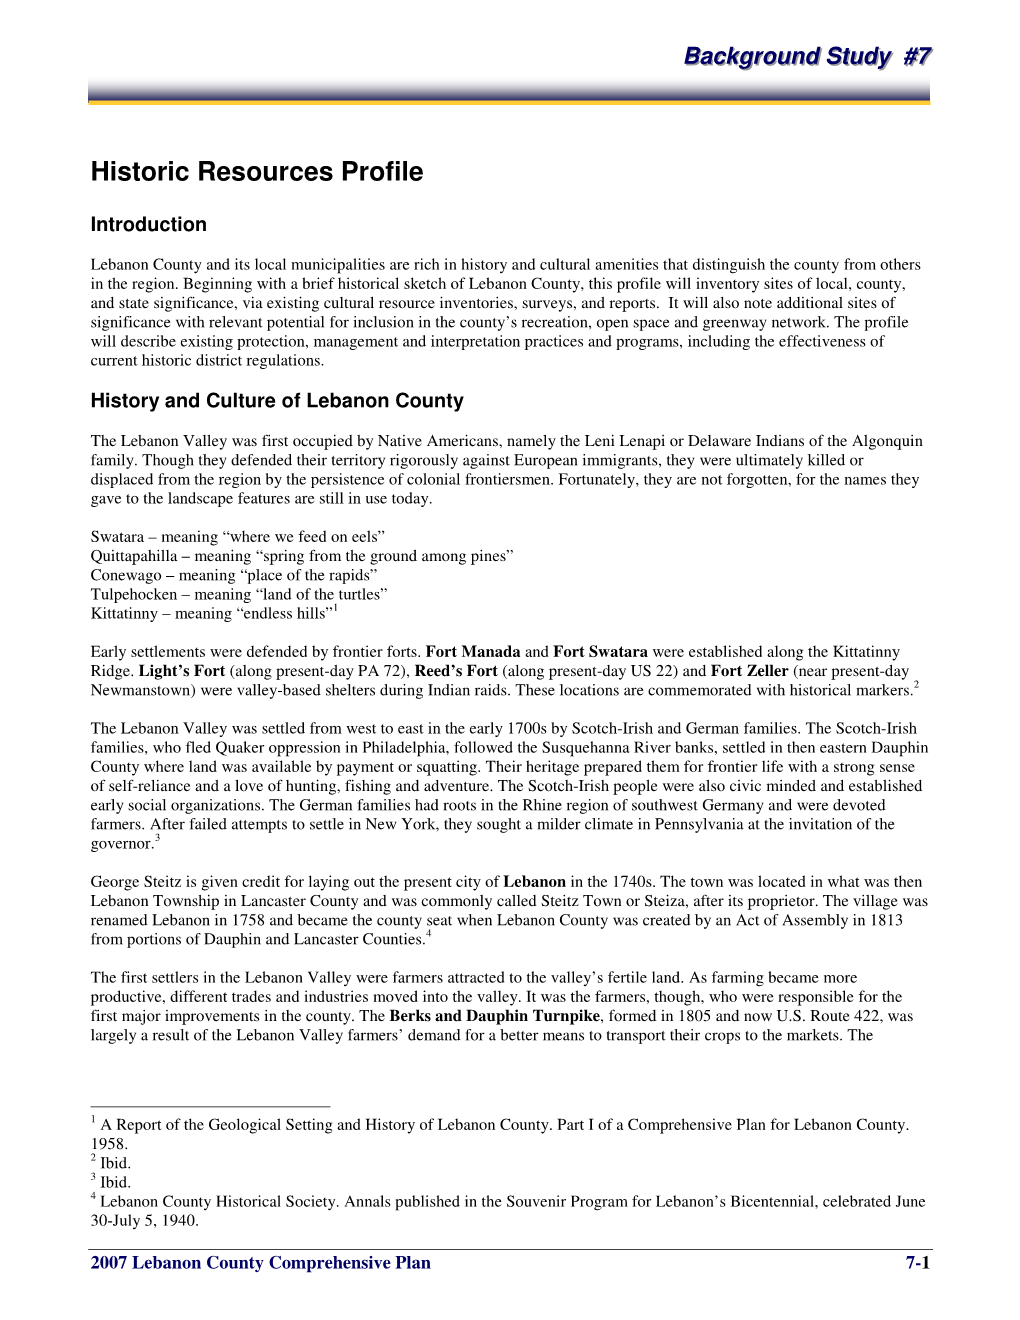 Historic Resources Profile